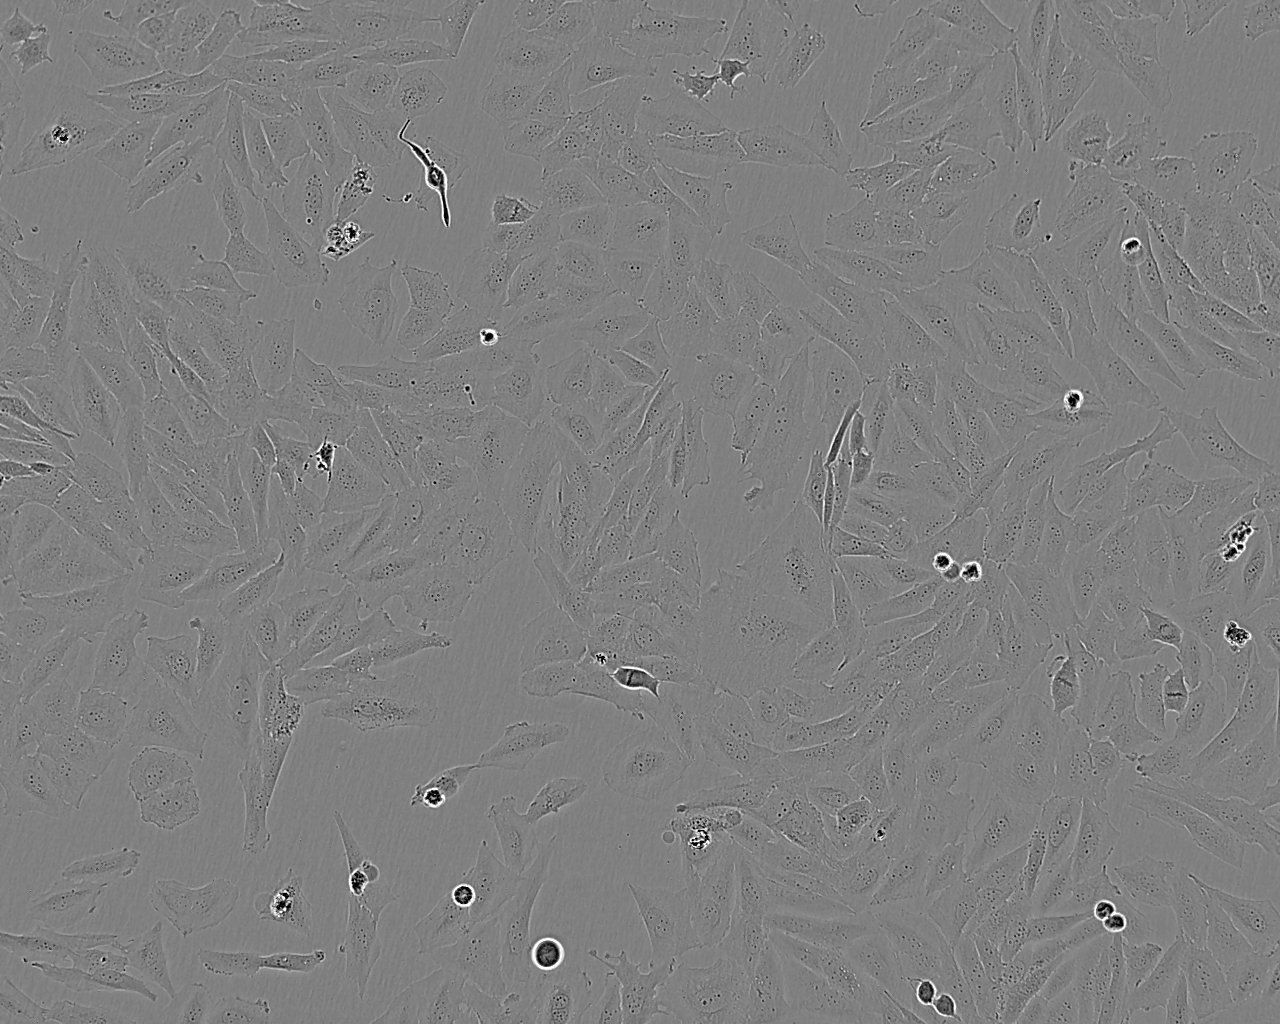 NCI-H1651 epithelioid cells人非小细胞肺癌细胞系